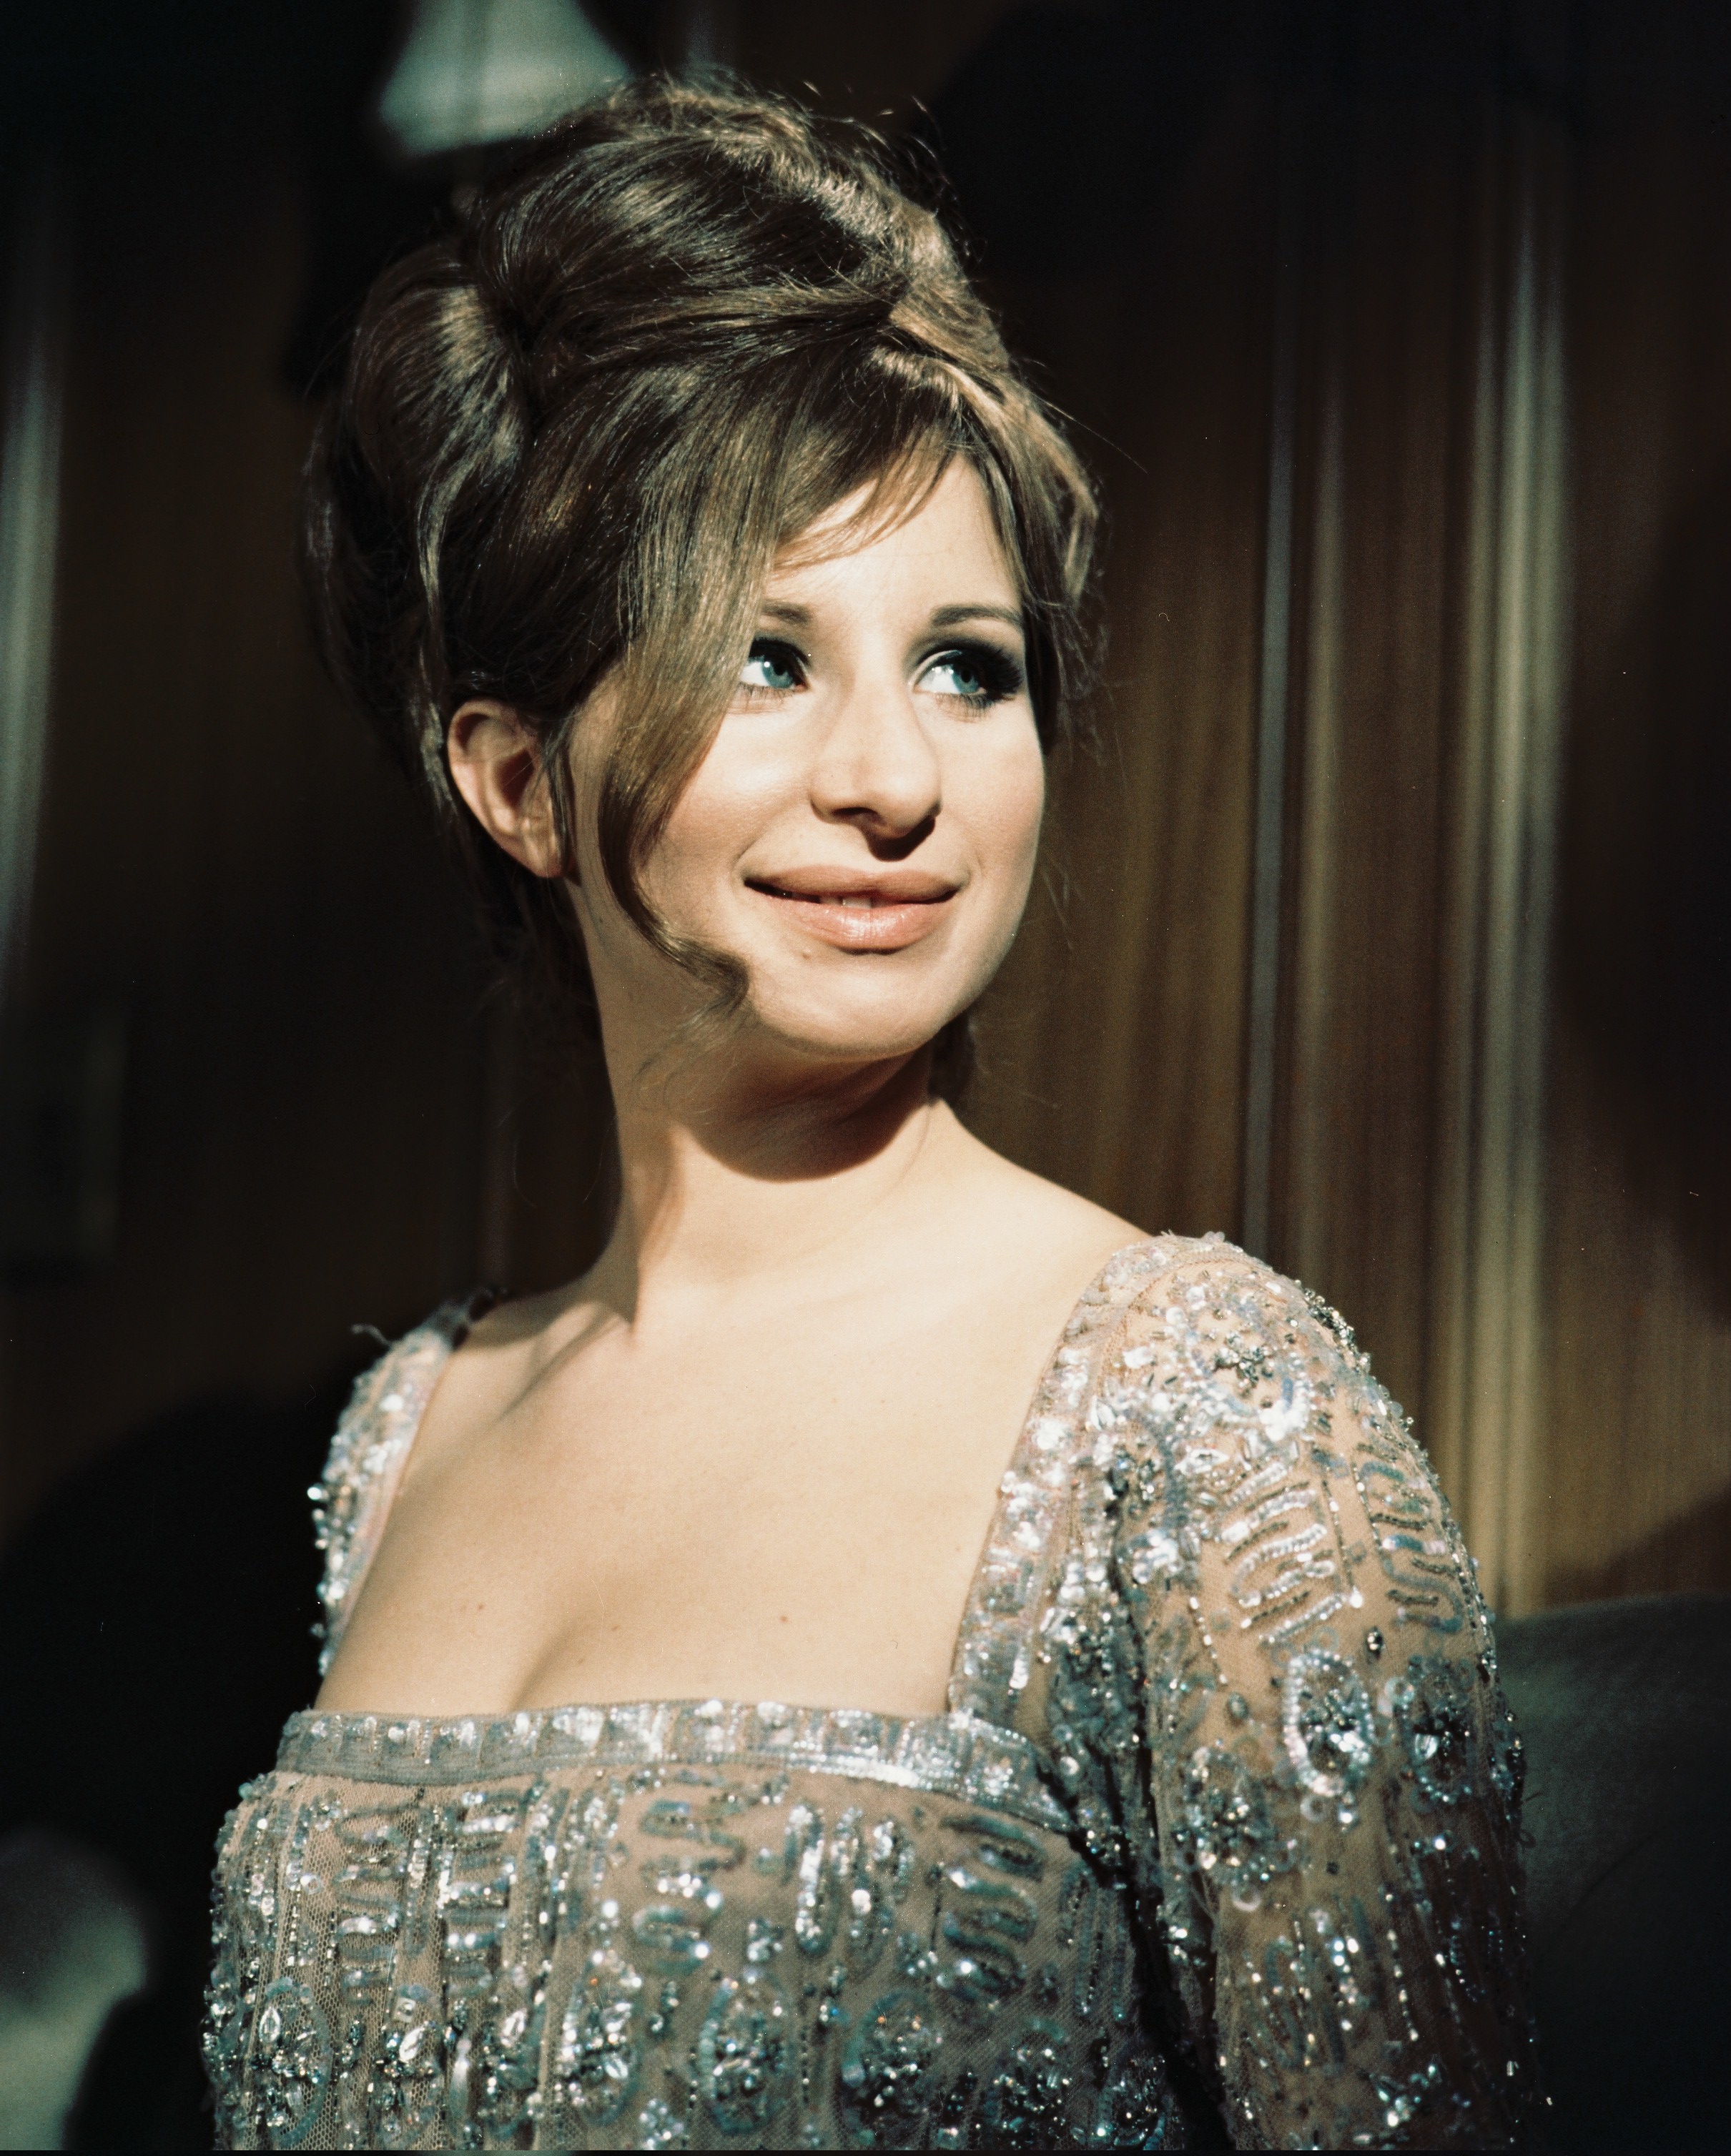 Publicity portrait of Barbra Streisand, 1968 | Source: Getty Images